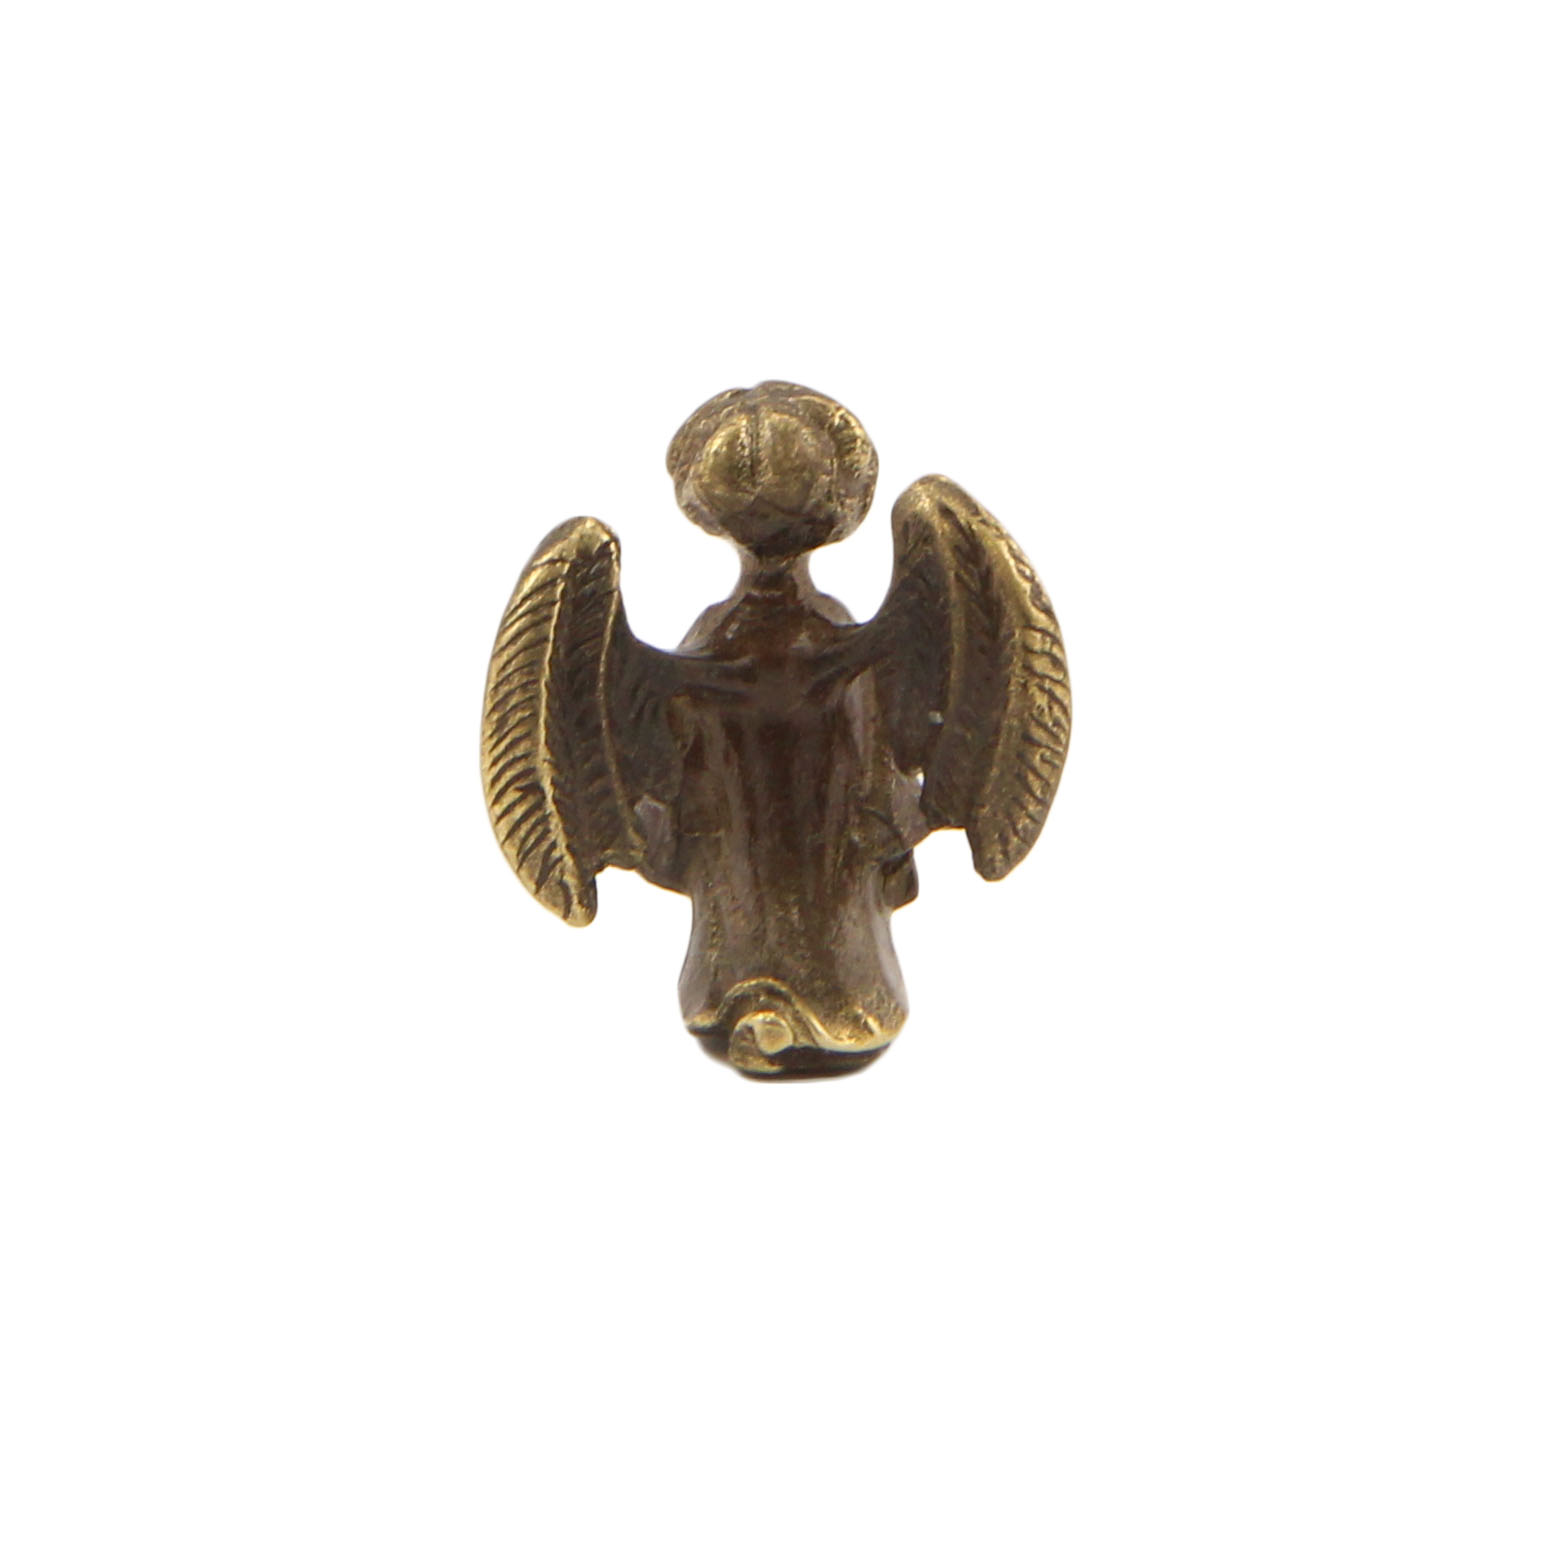 Бронзовый сувенир Ангел безликий малыйФото 15455-09.jpg